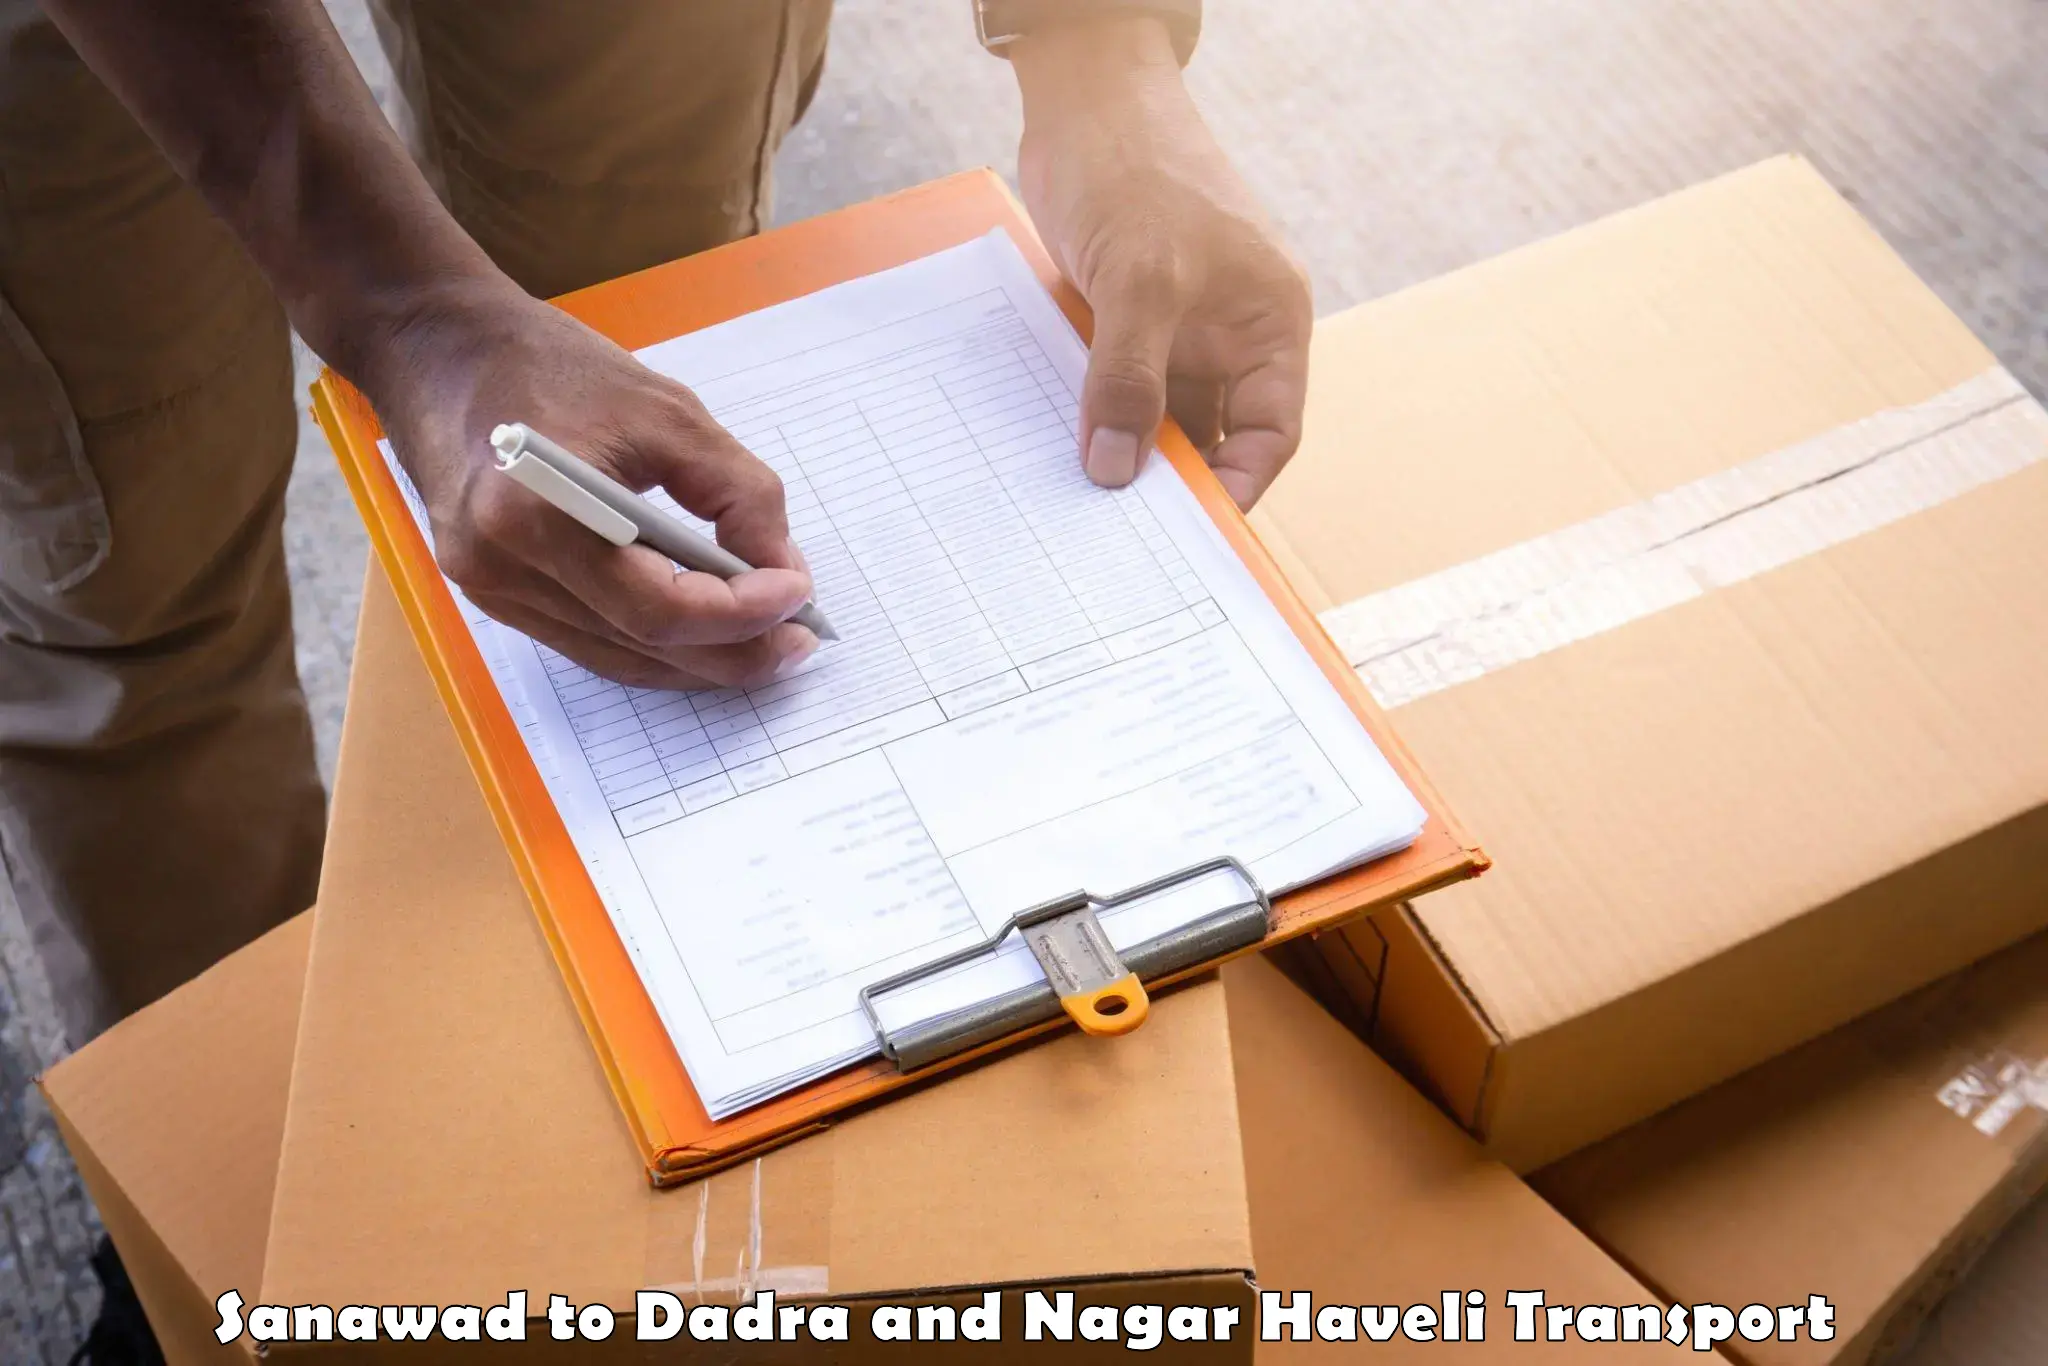 Truck transport companies in India Sanawad to Dadra and Nagar Haveli